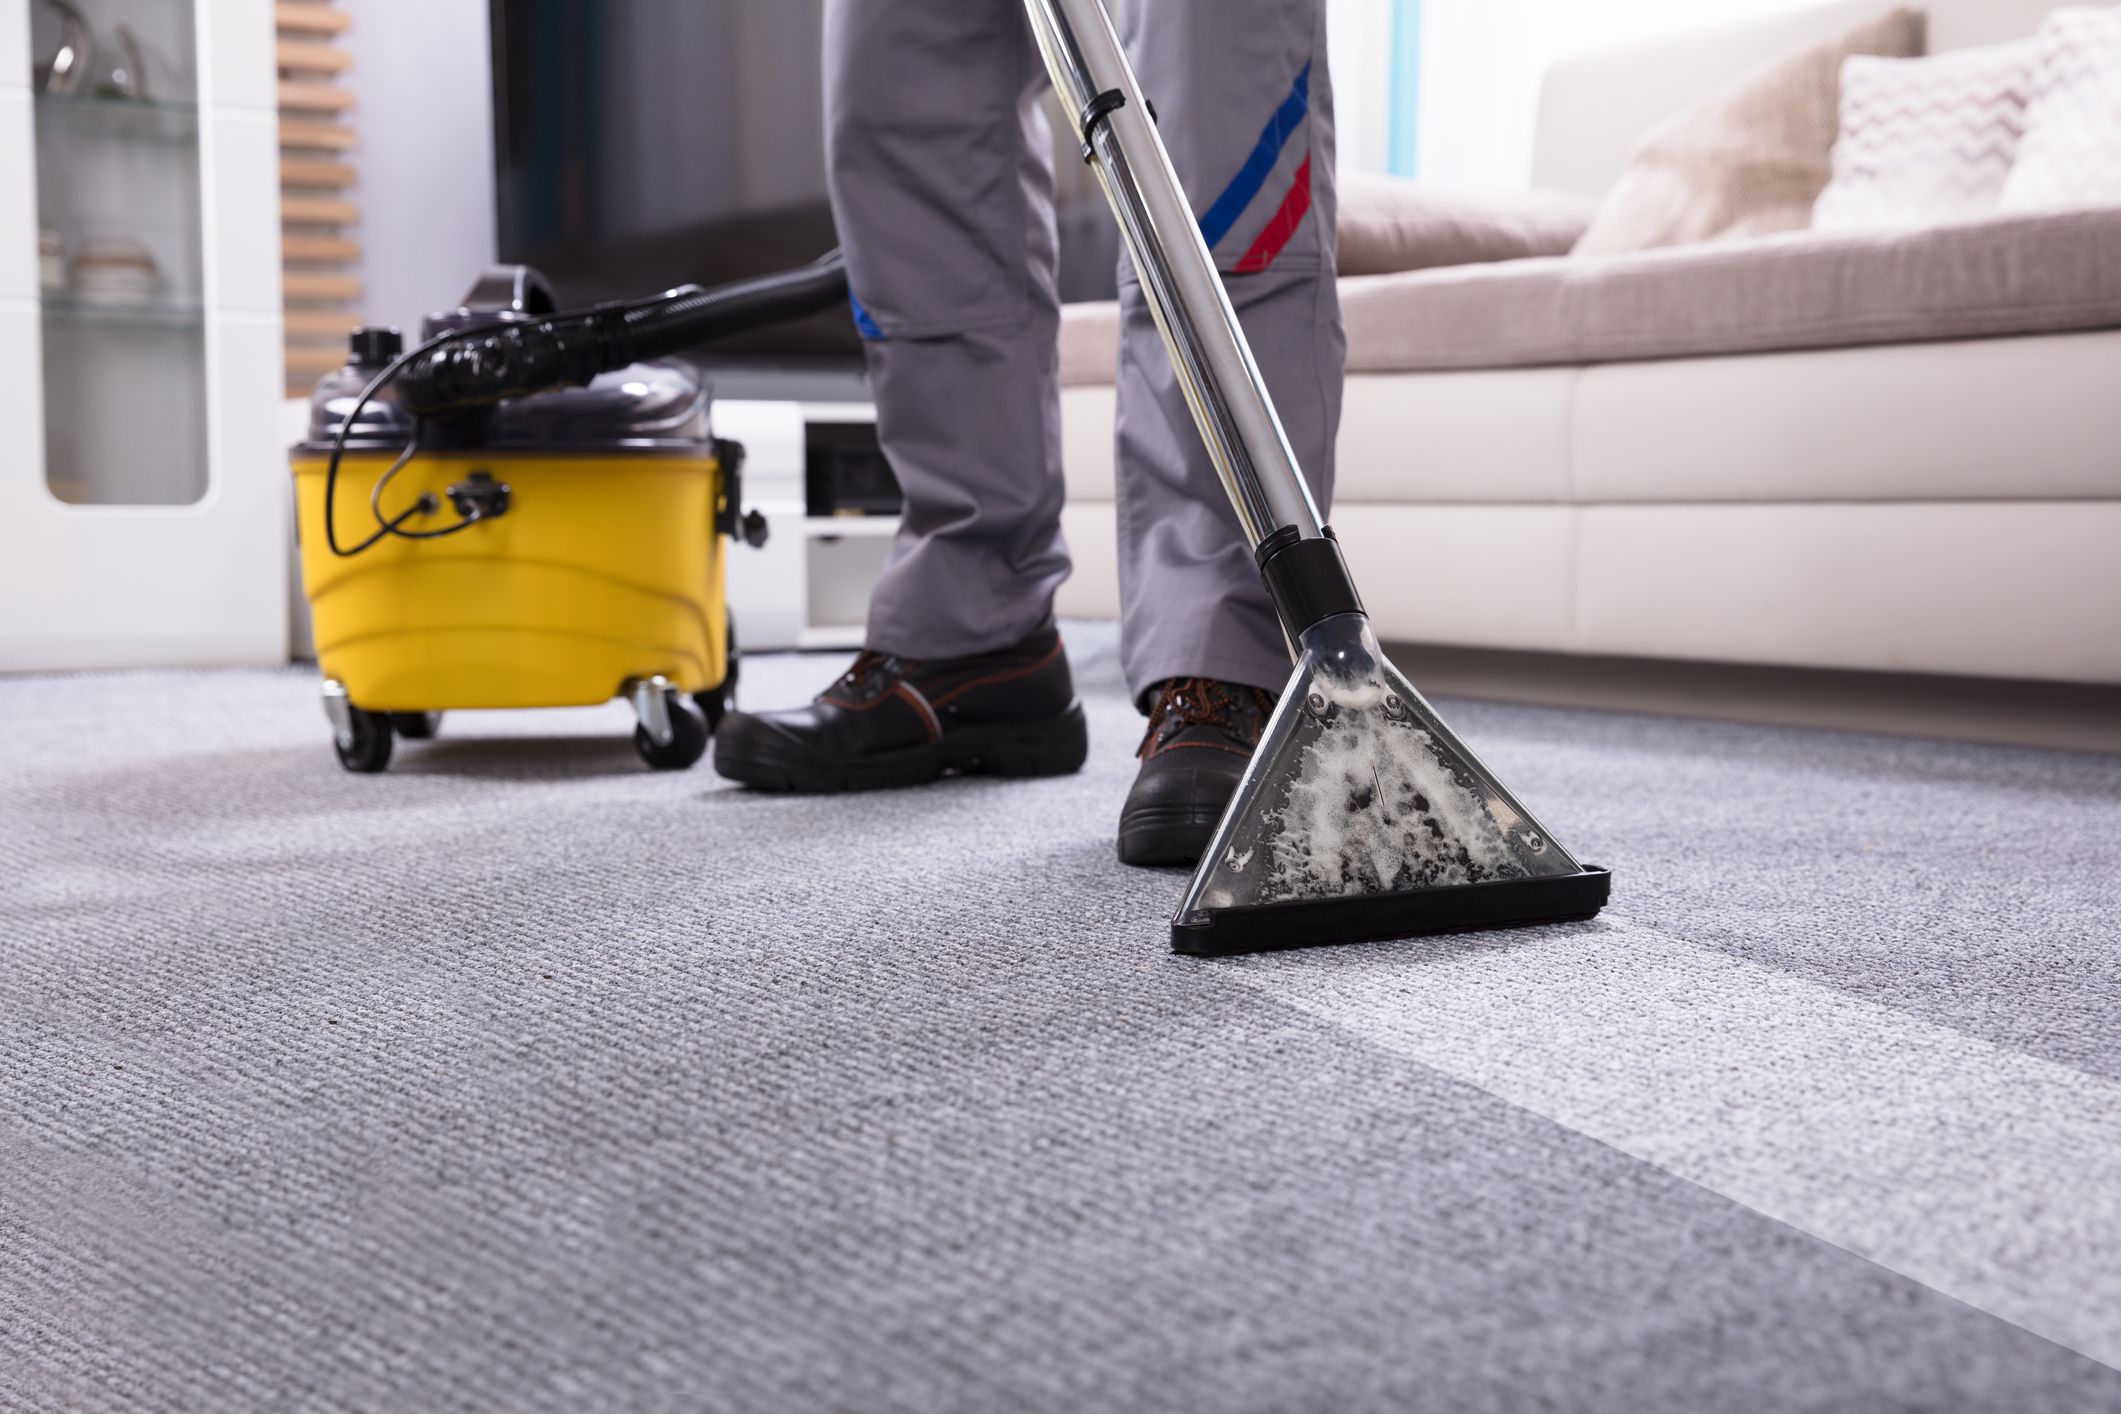 Professional carpet cleaning equipment